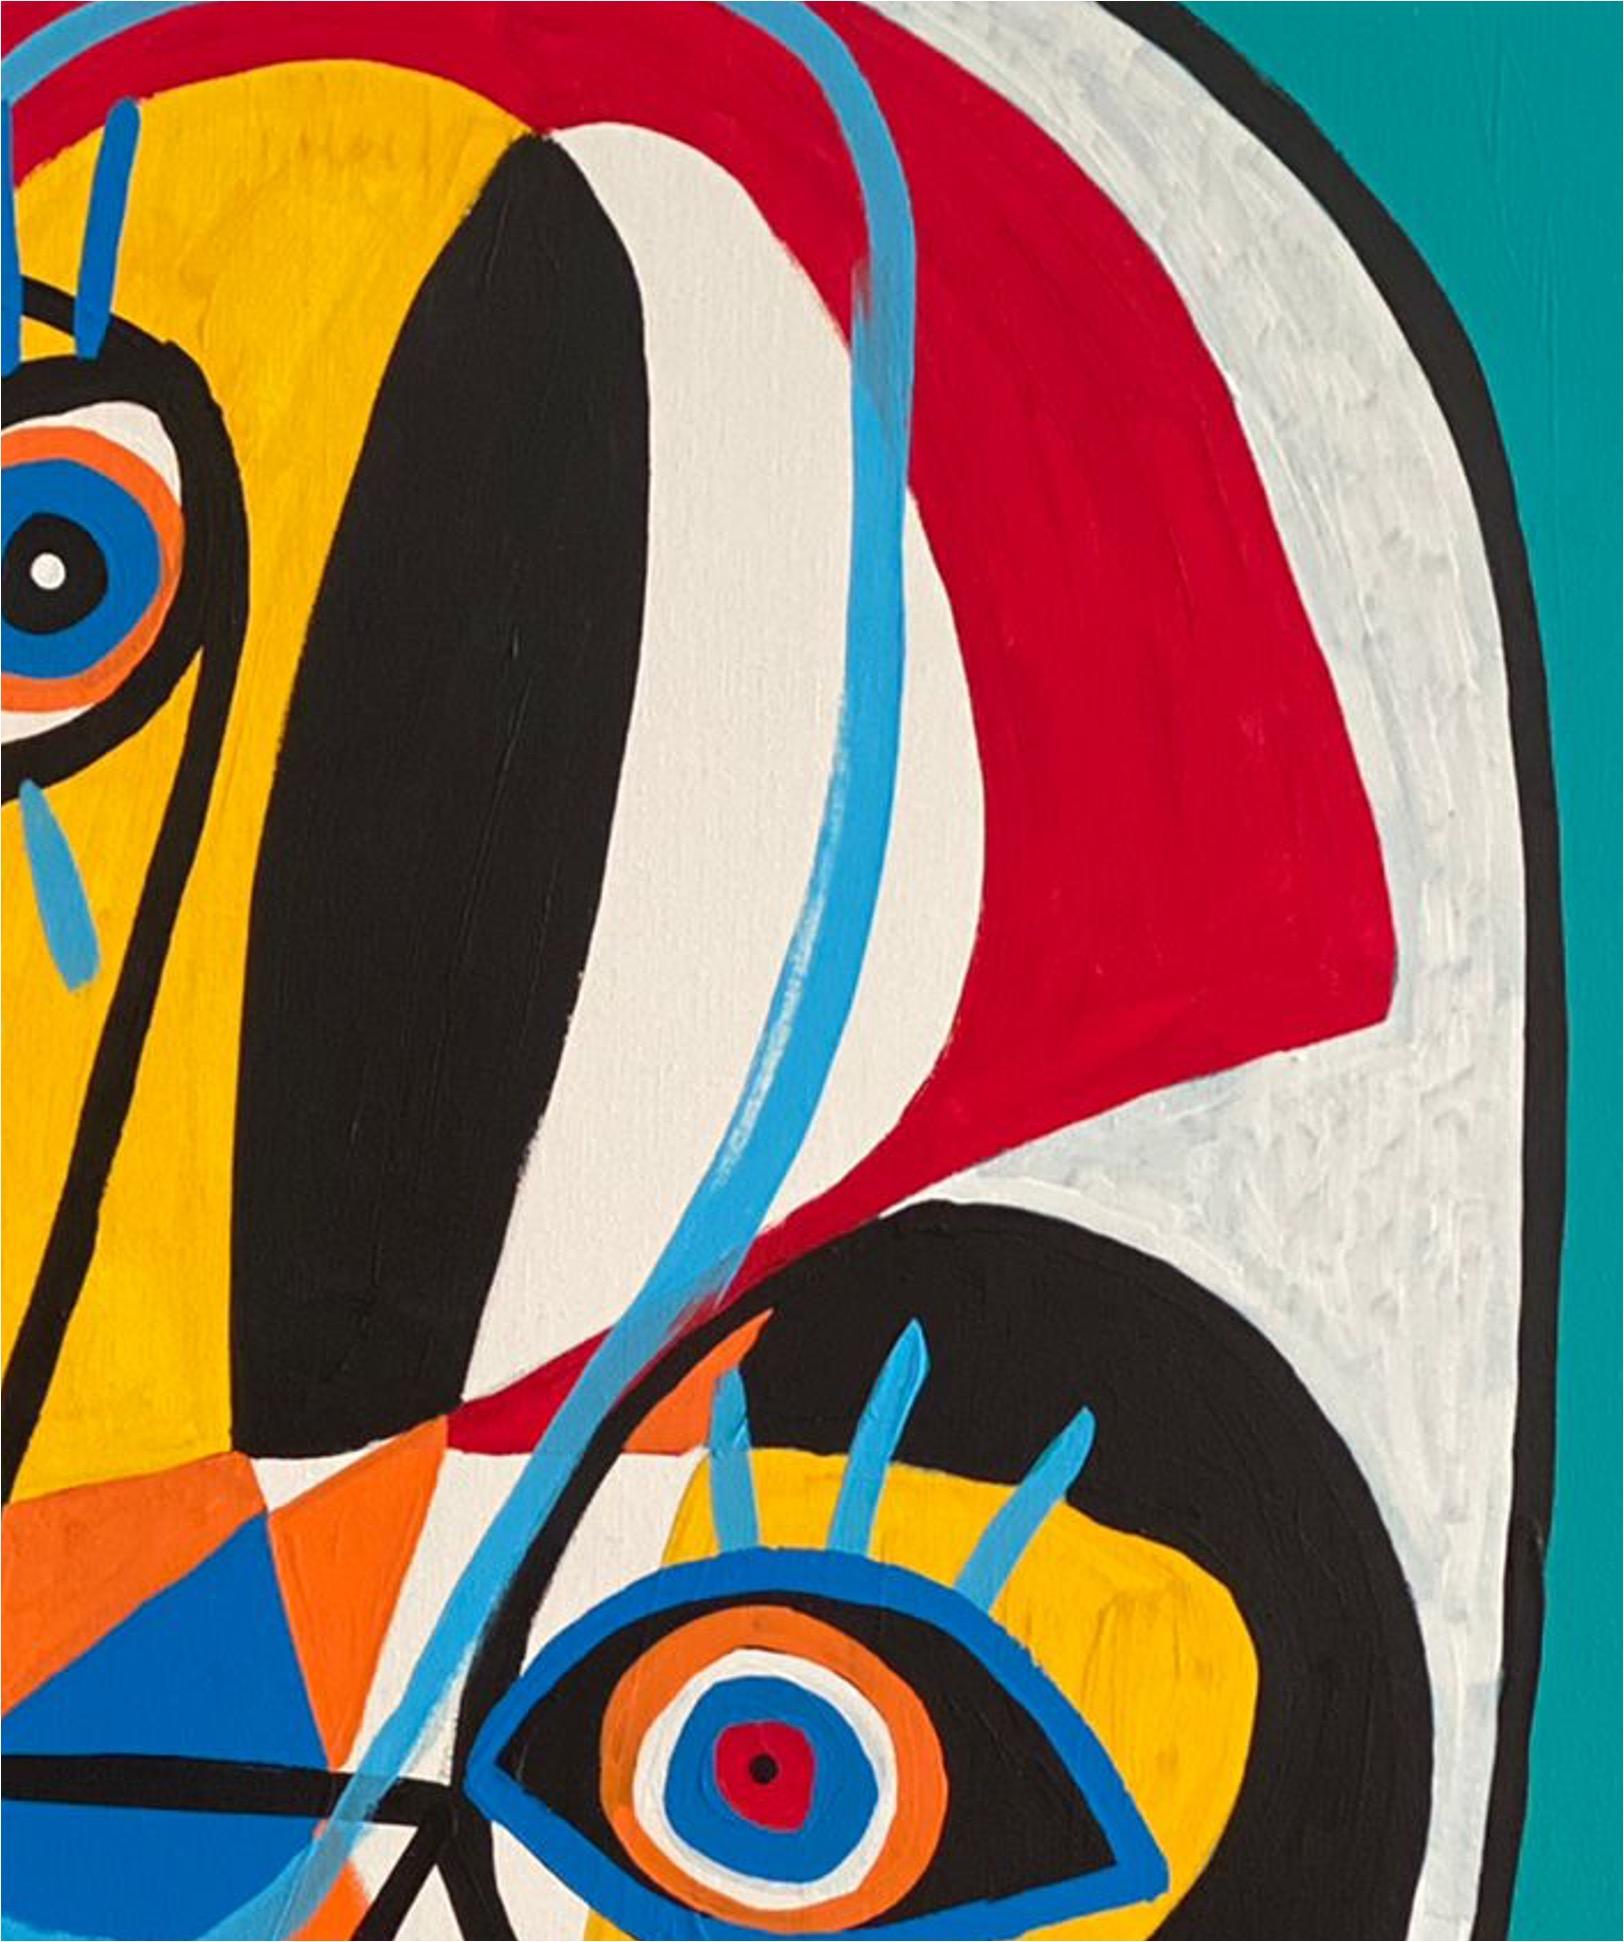 Contemporary Art, Abstract Painting
Acrylic on canvas
100x75cm
Signed 



About the artist
Enrique Pichardo (Mexico City, 1973) graduated from Escuela Nacional de Pintura, Escultura y Grabado (ENPEG) “La Esmeralda”. As a Mexican Contemporary